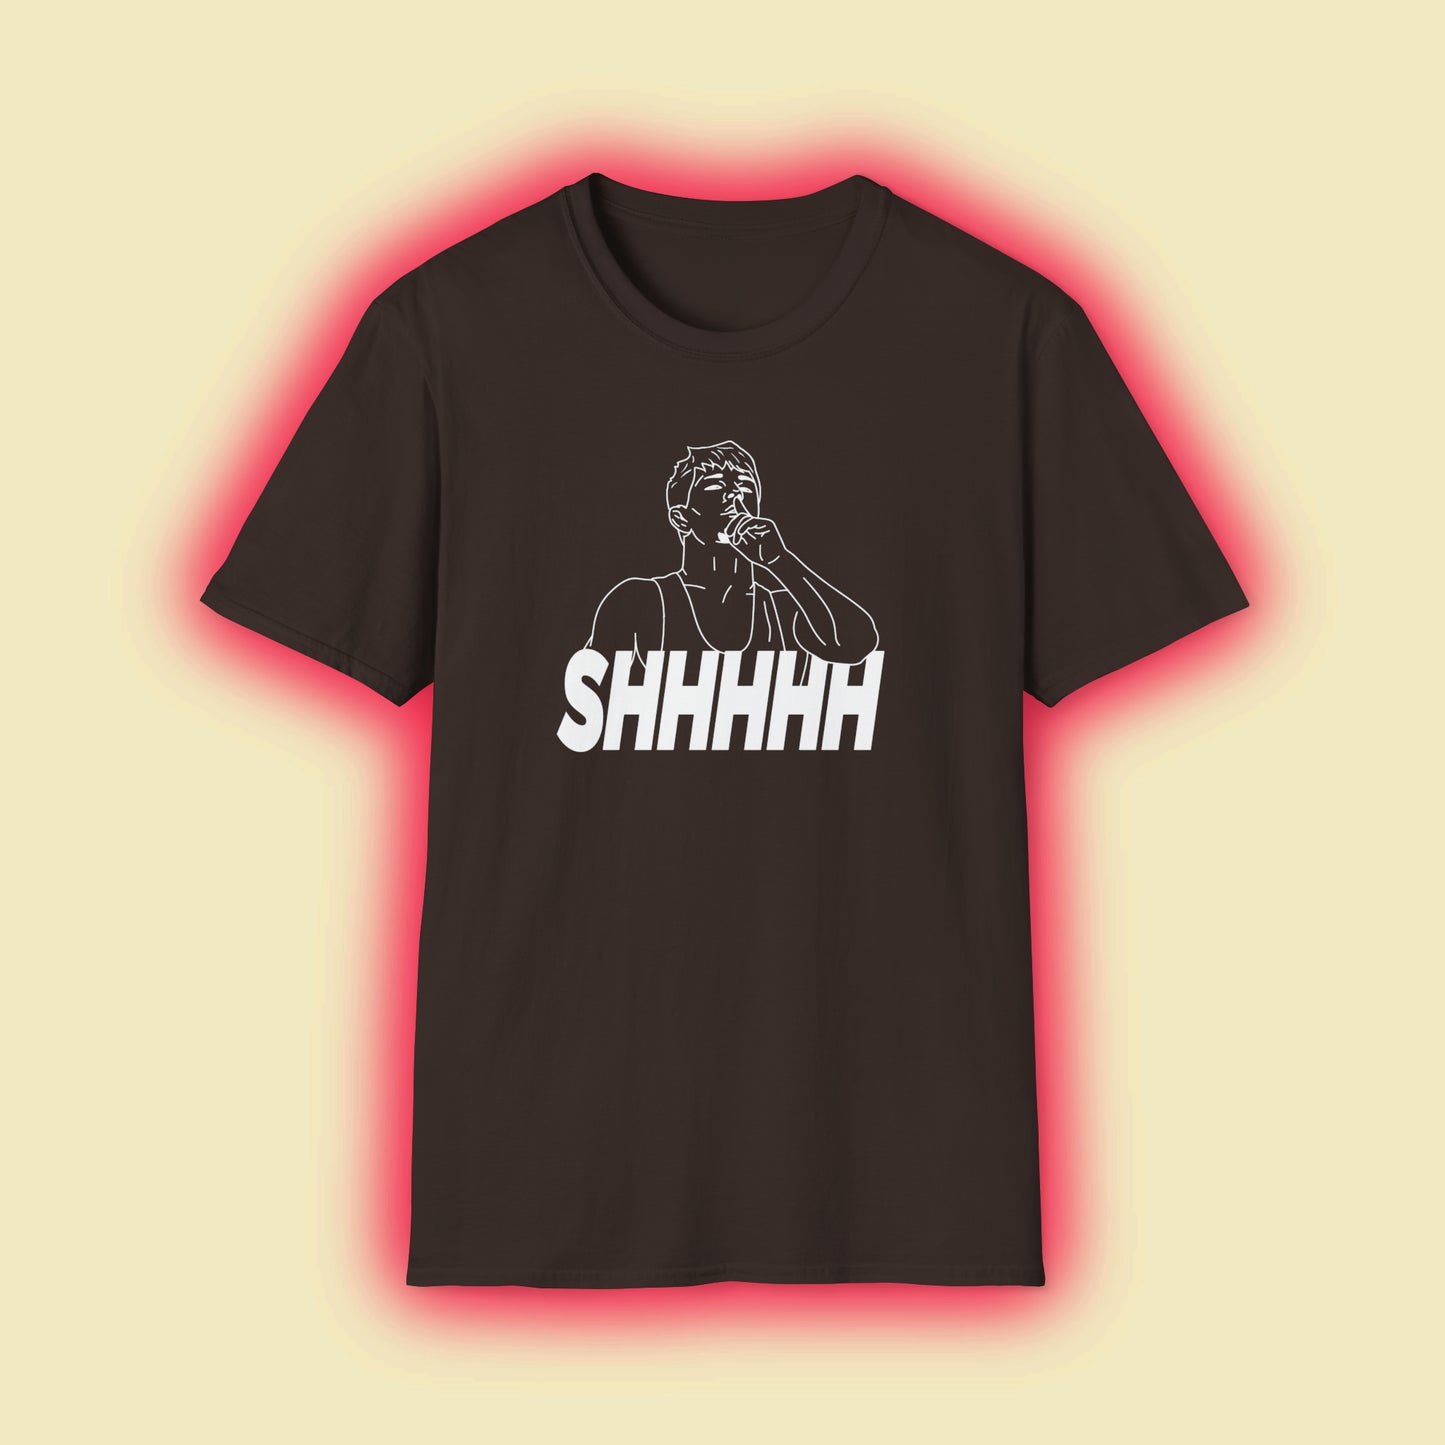 Jore Volk "SHHHHH" Shirt